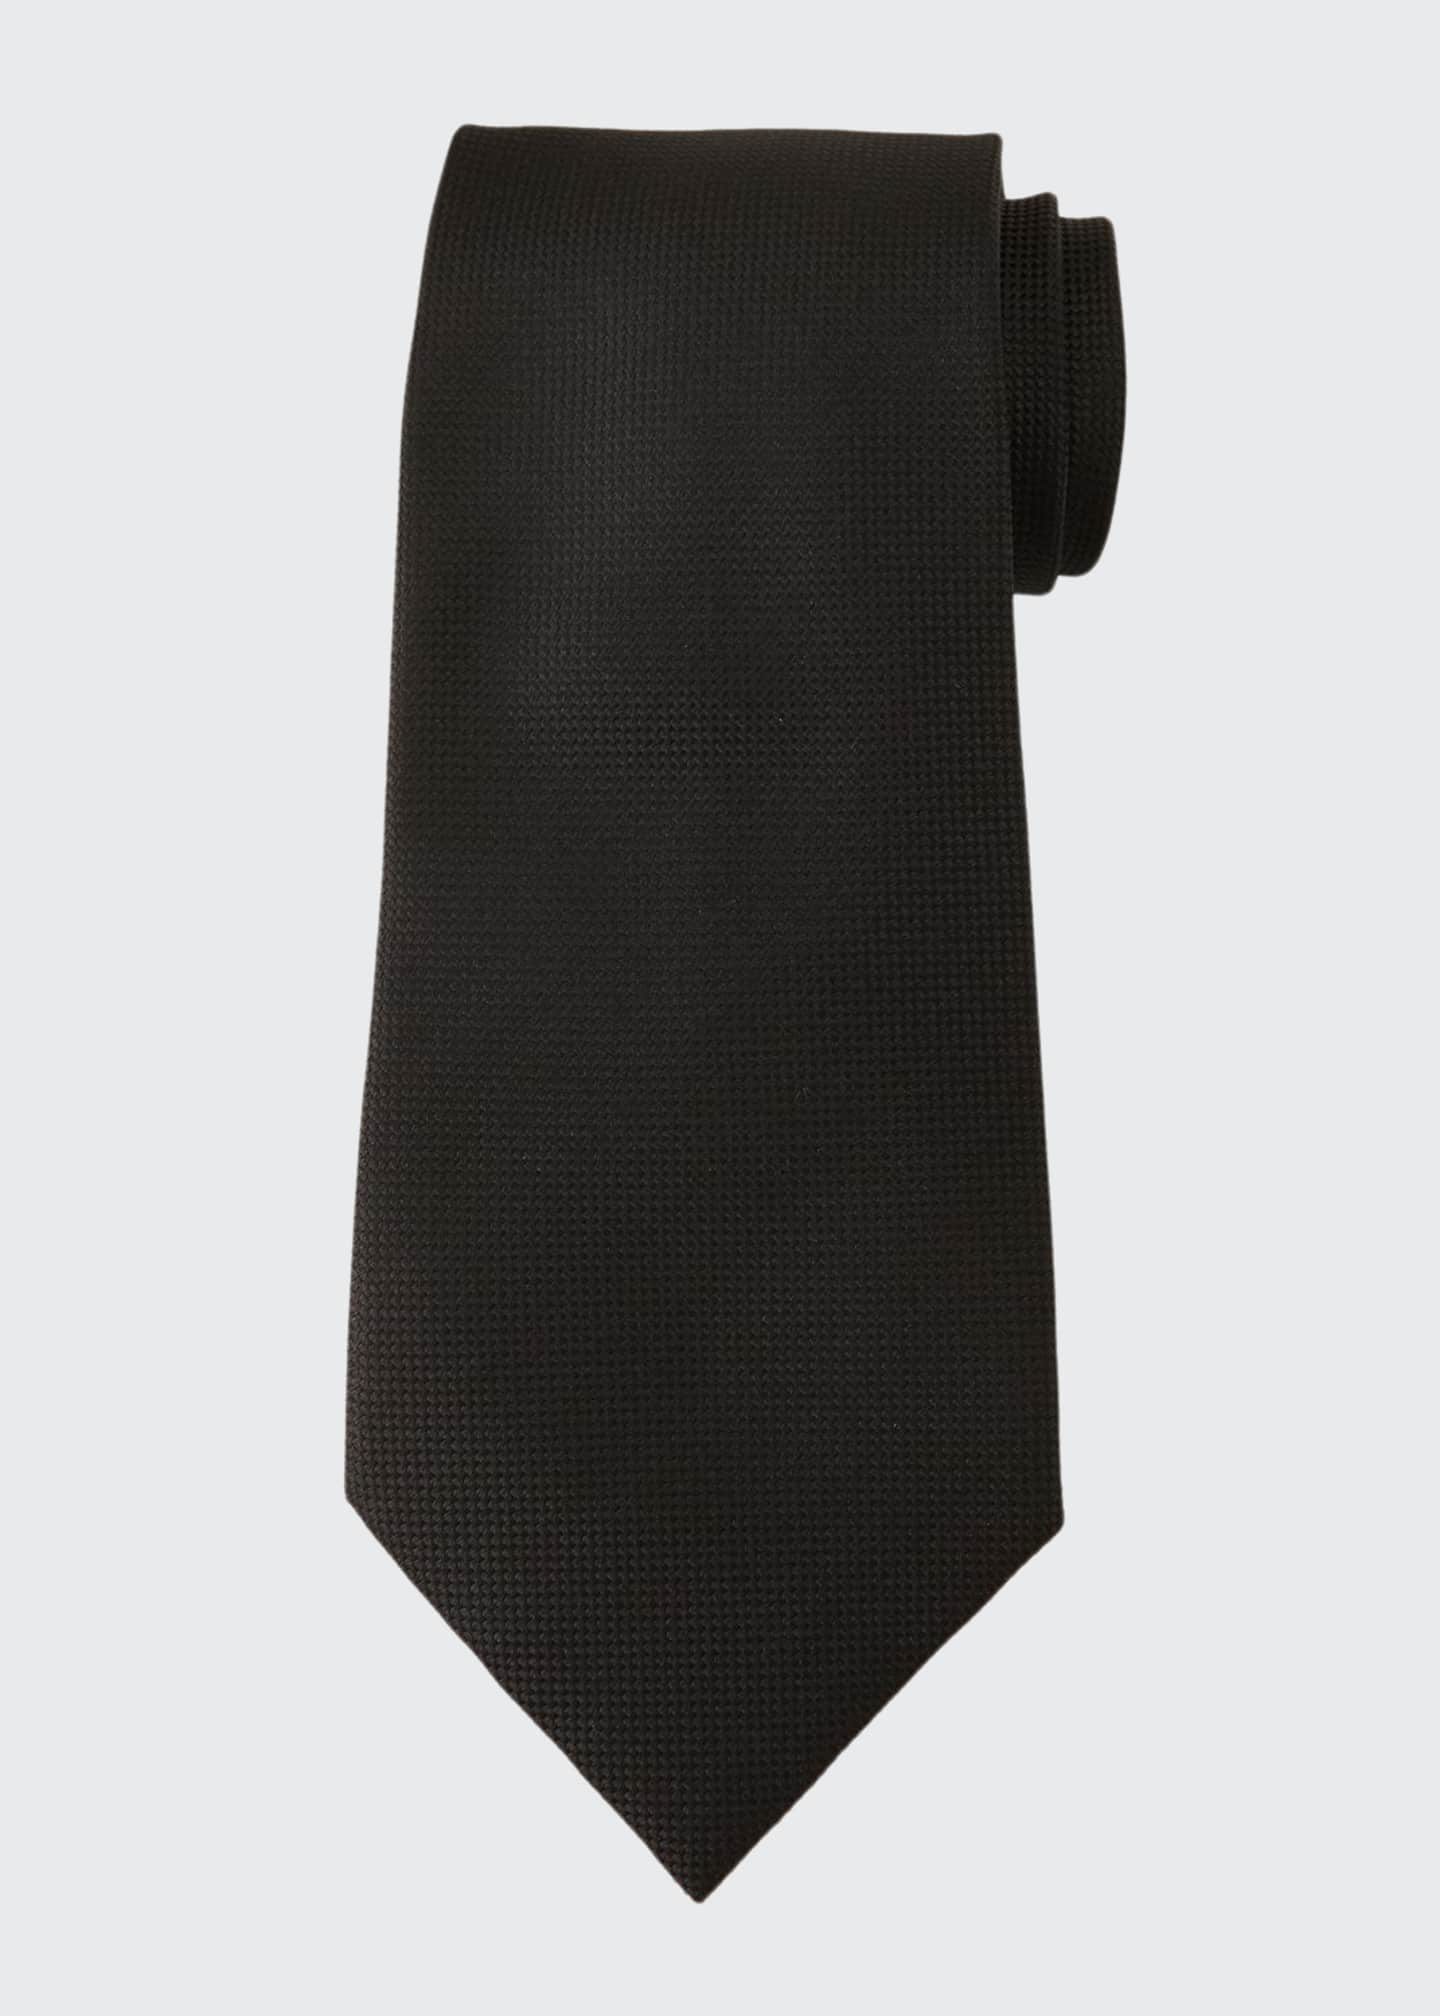 Charvet Knit Silk Tie, Black